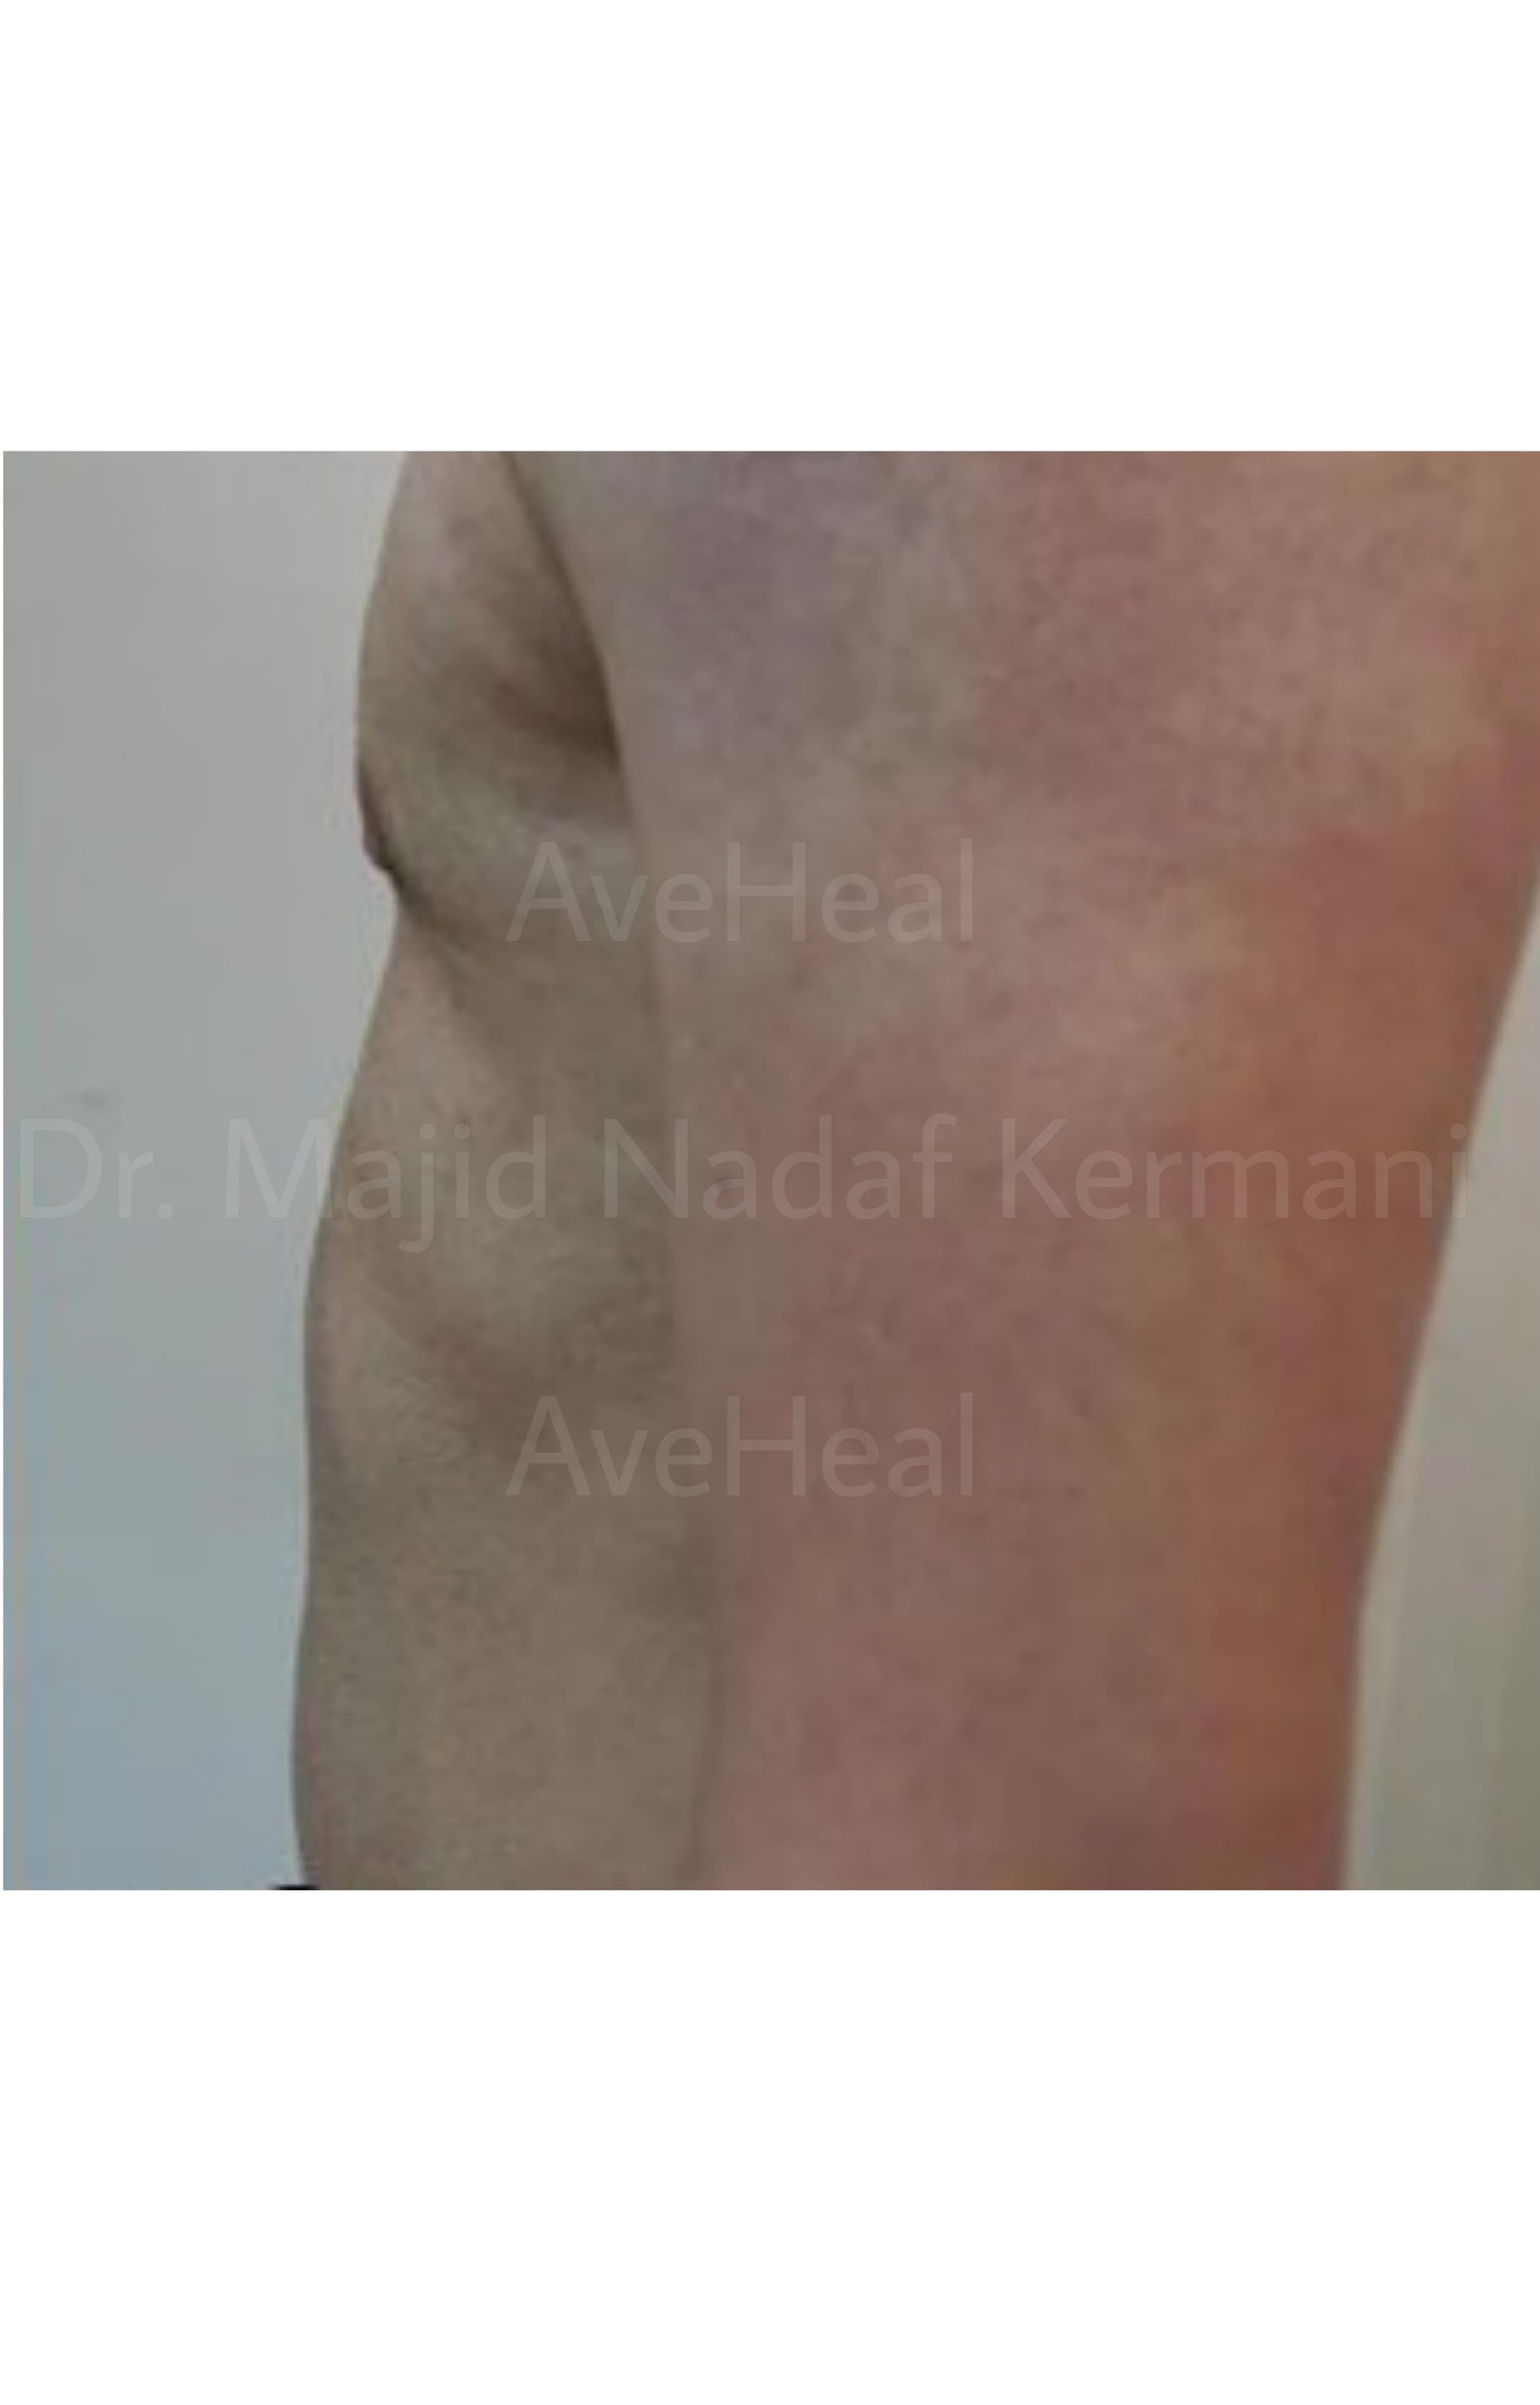 after-gynacomastia-dr-majid-nadaf-kermani